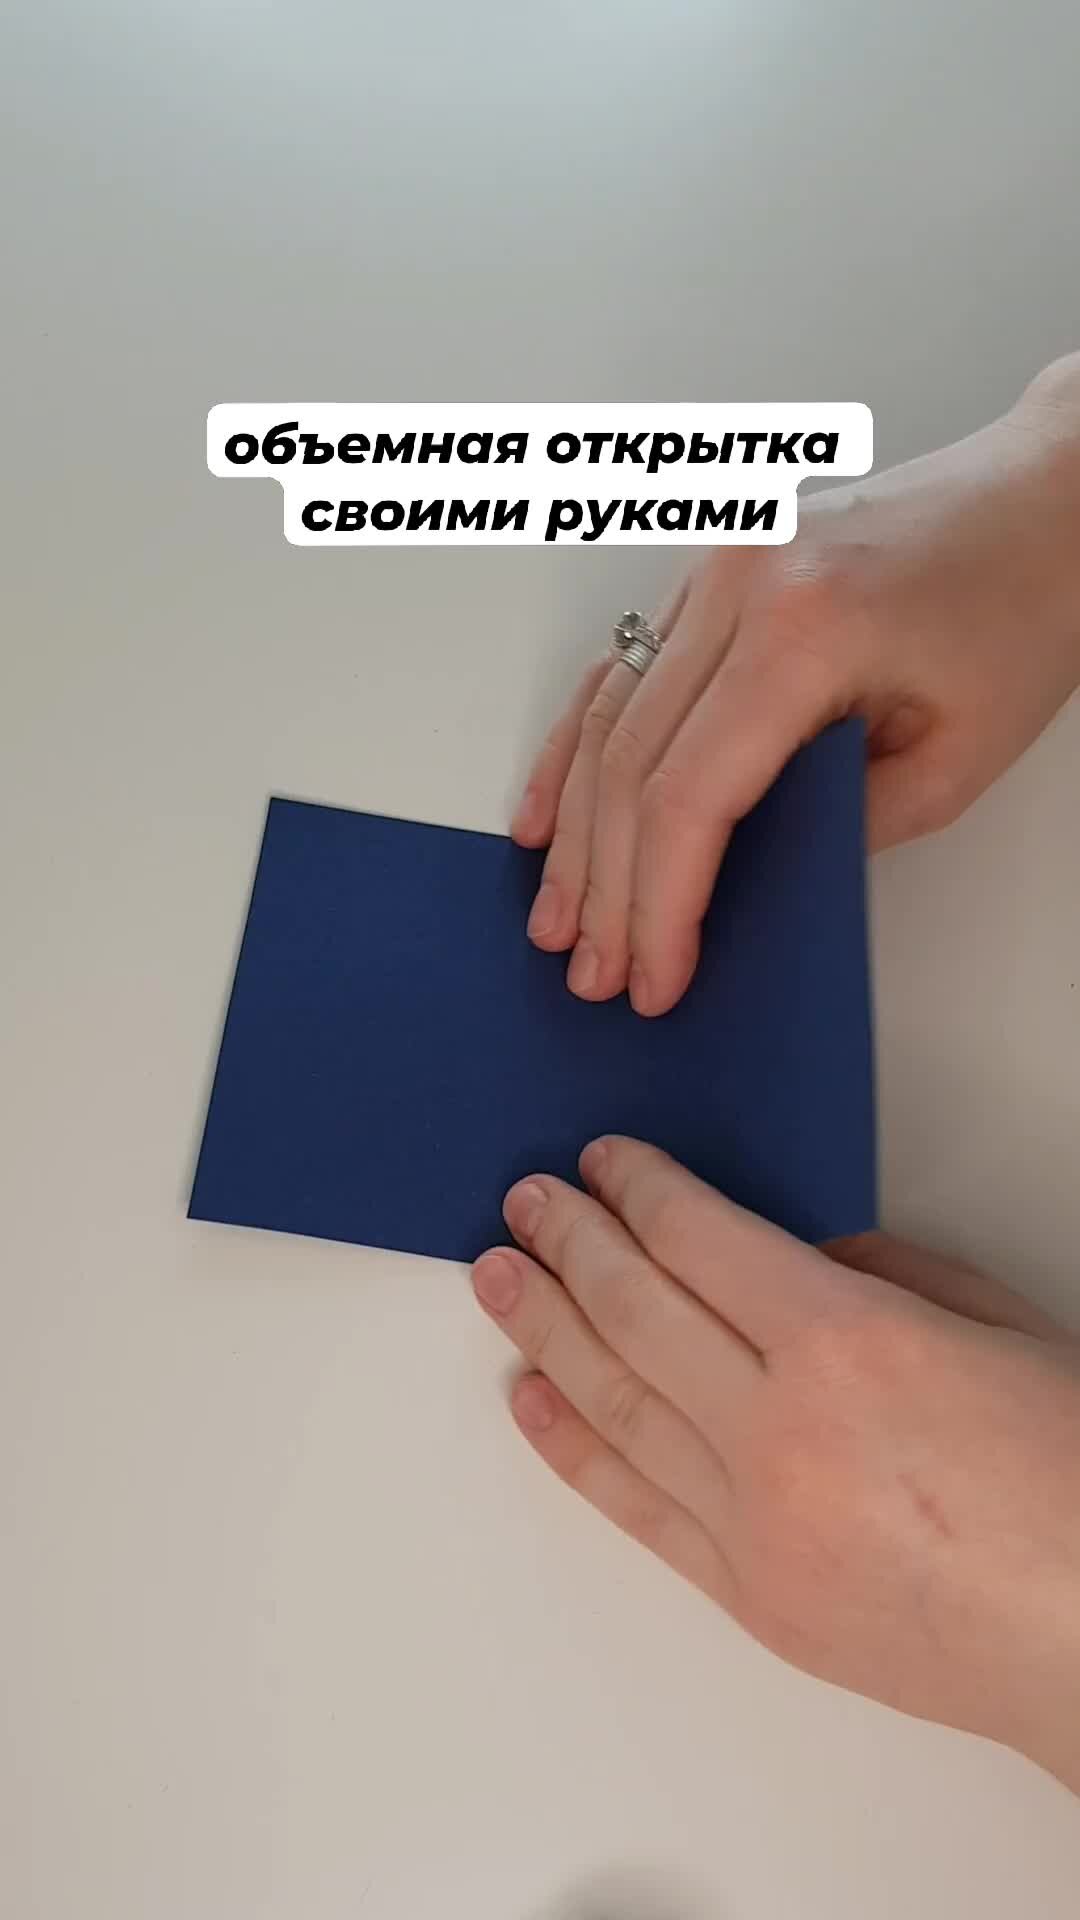 Объемная открытка-раскладушка «Арка» - всё для скрапбукинга от manikyrsha.rur